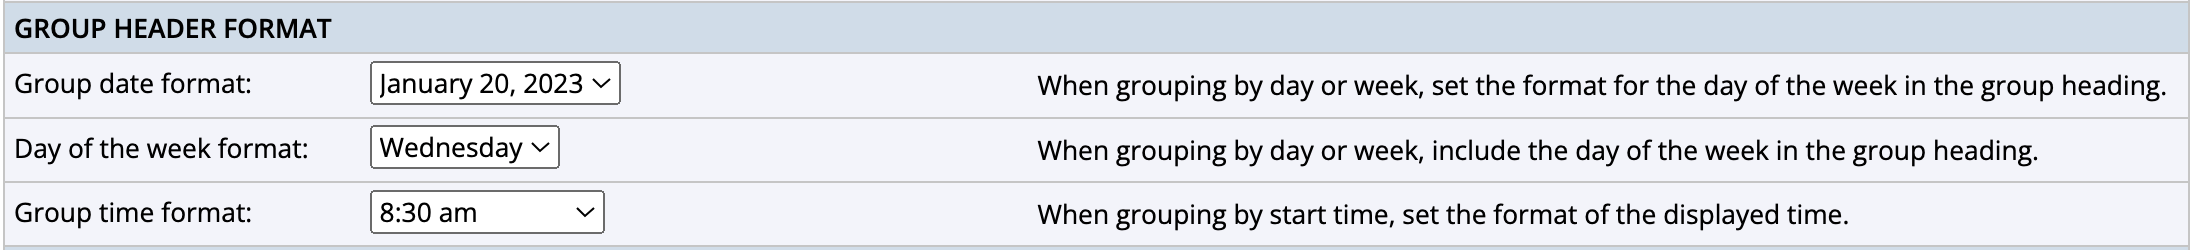 Group header format settings